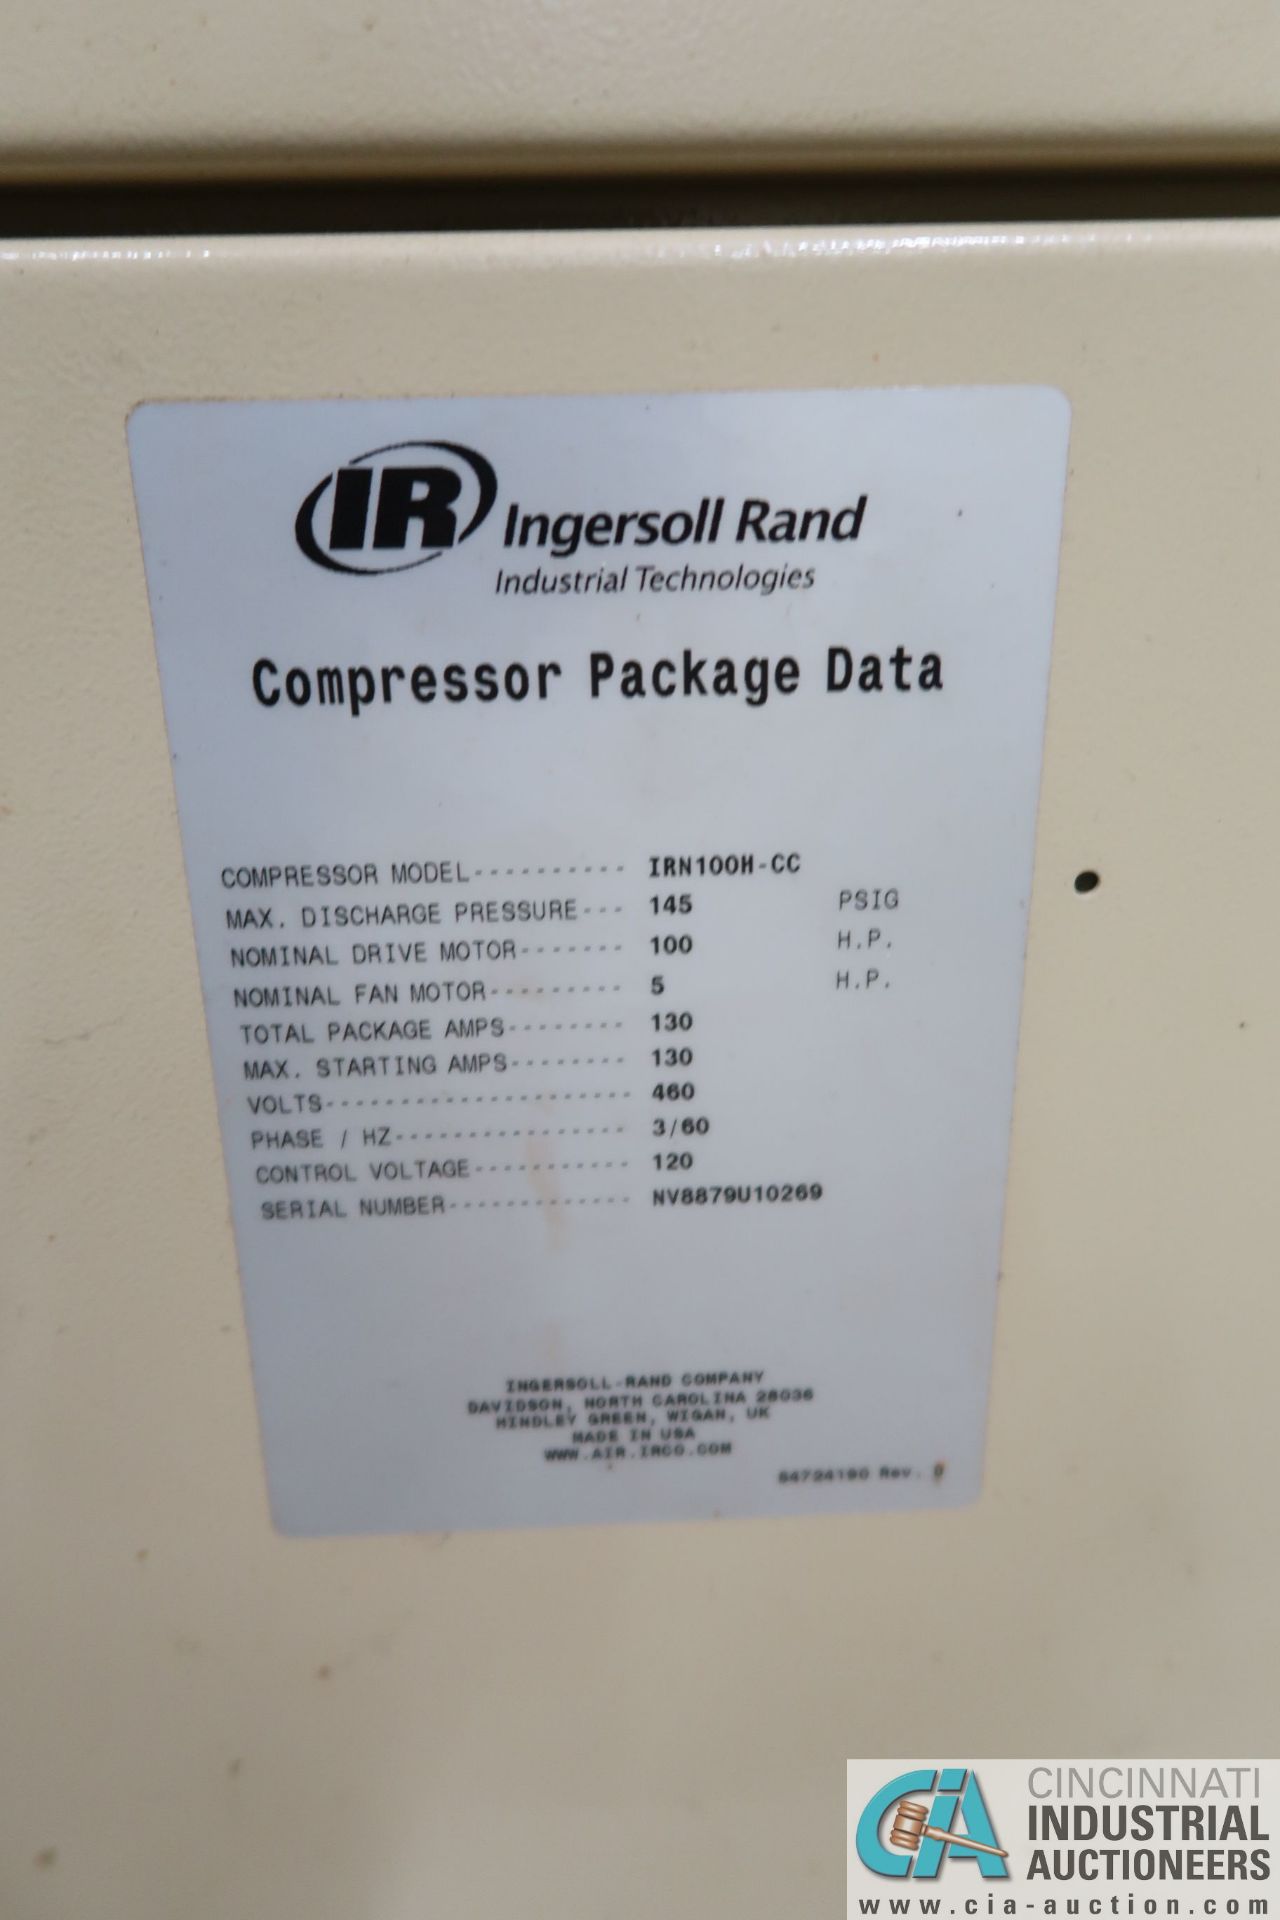 100 HP INGERSOLL RAND MODEL IRN100H-CC AIR COMPRESSOR; S/N NV8879U10269, 145 PSIG, 34,373 HOURS - Image 3 of 3